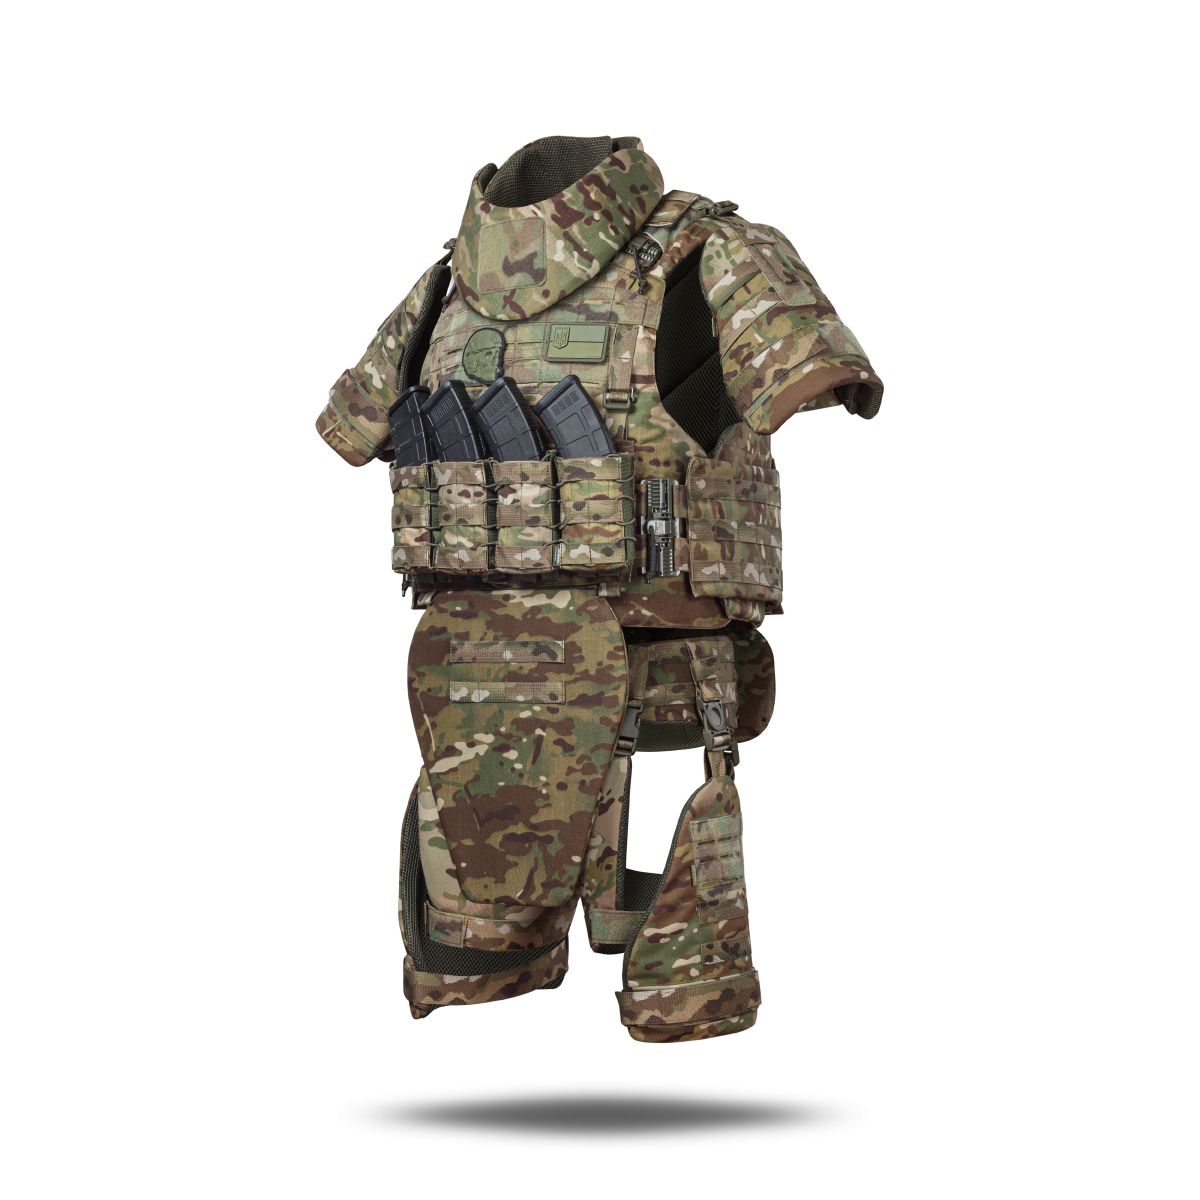 Бронекостюм A.T.A.S. (Advanced Tactical Armor Suit) Level I. Клас захисту – 1. Мультикам. S/M